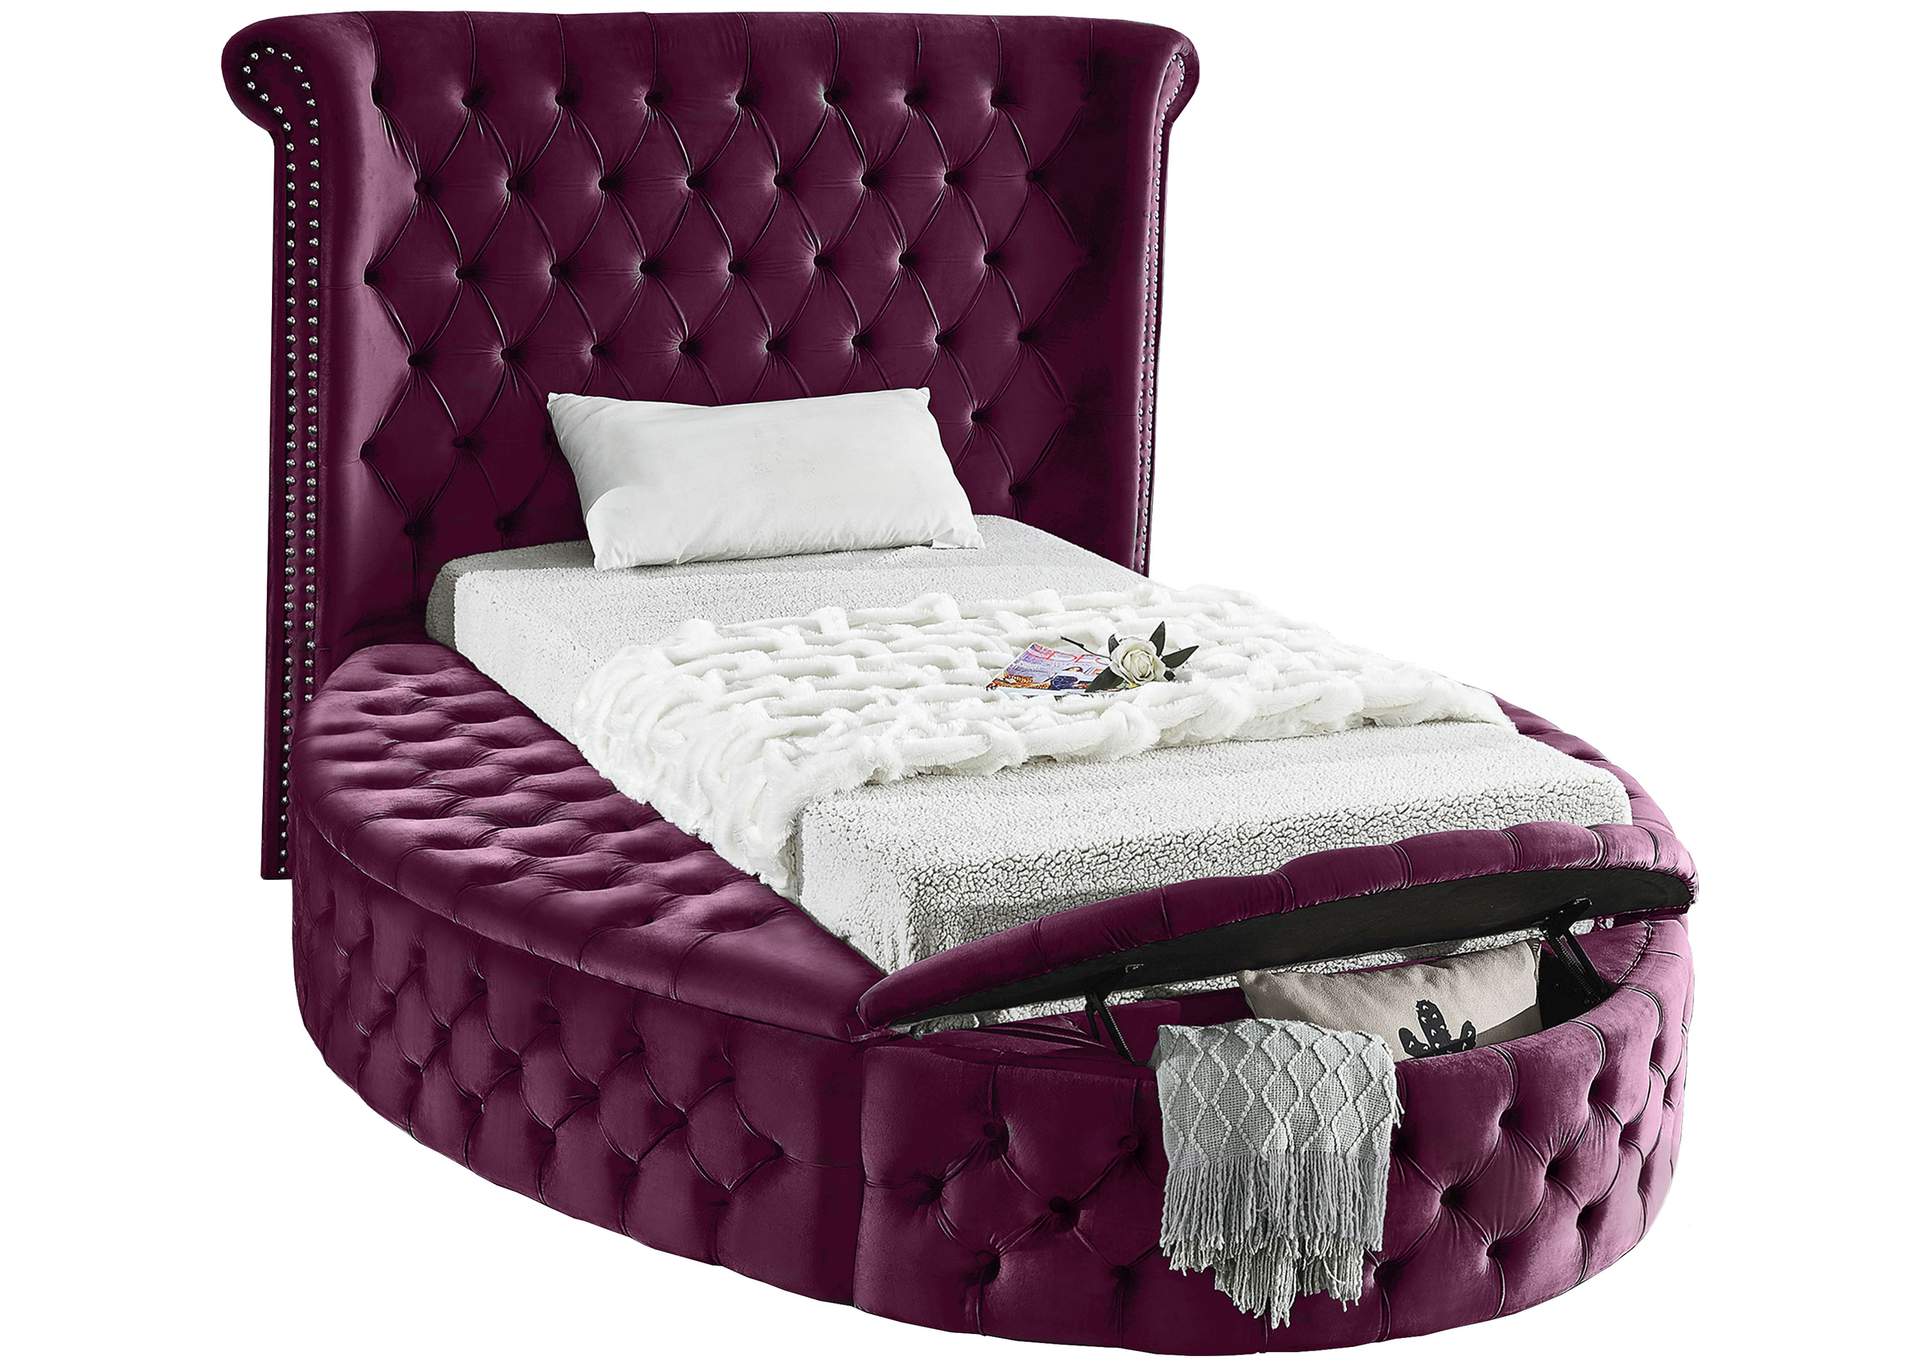 Luxus Purple Velvet Twin Bed Best, Purple Headboards For King Size Beds